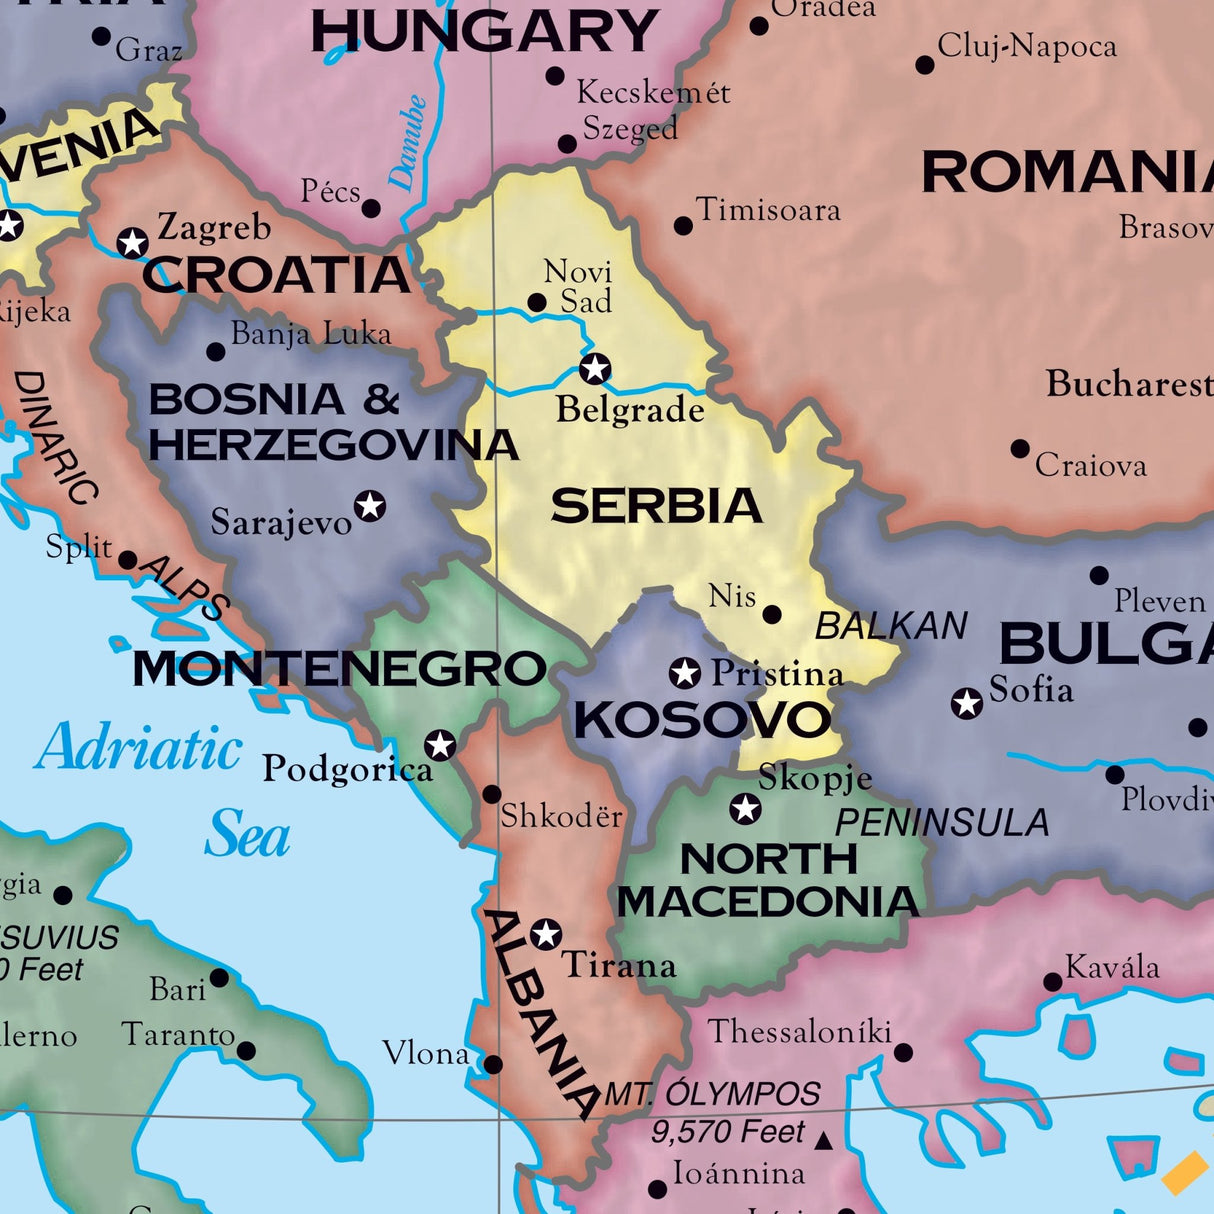 Europe Essential Wall Map - KA-EUR-ESSTL-42X53-PAPER - Ultimate Globes